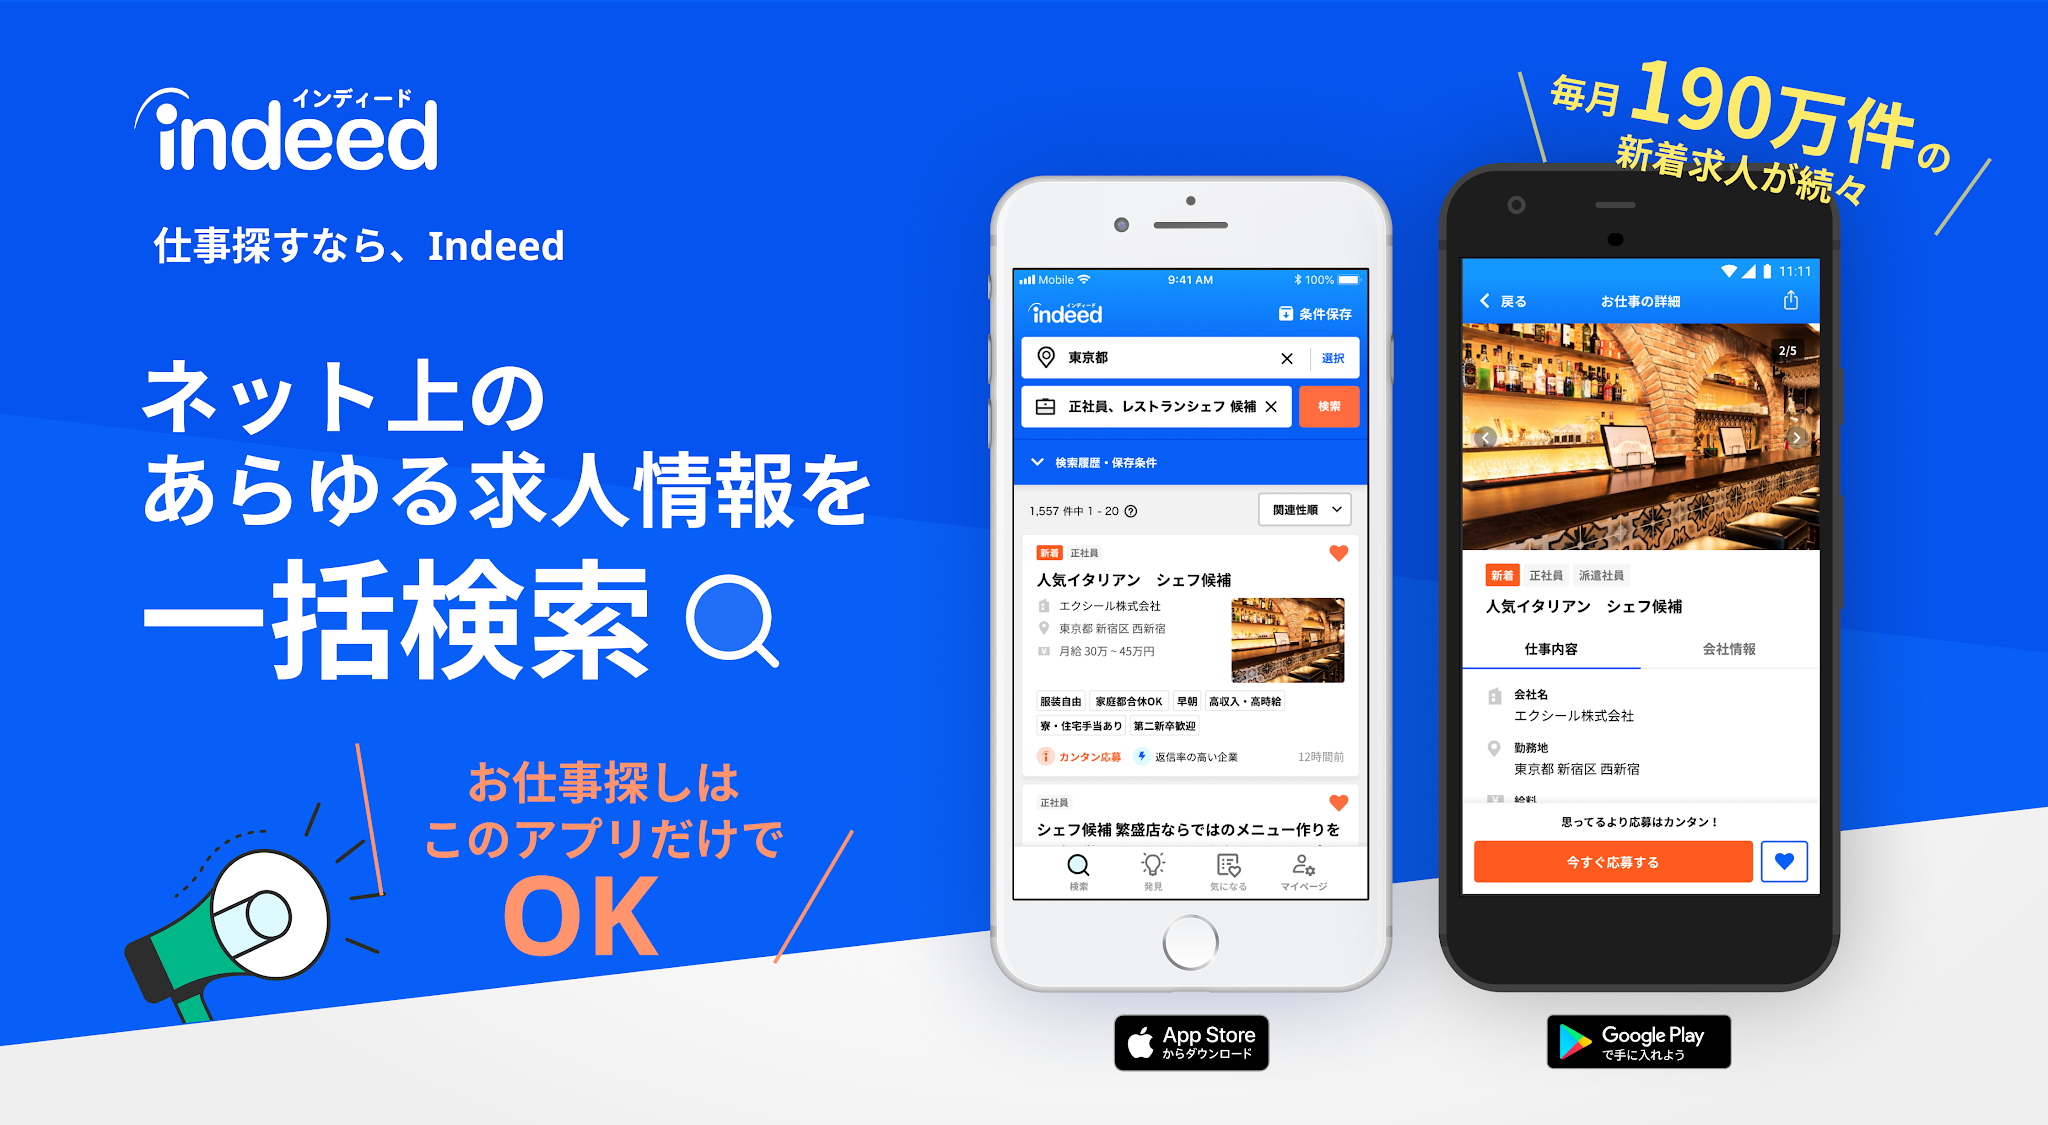 Indeed 日本向けアプリ公開から10周年を迎え 初めての全面大規模リニューアルを実施 3月16日より公開 Indeed Japan株式会社のプレスリリース